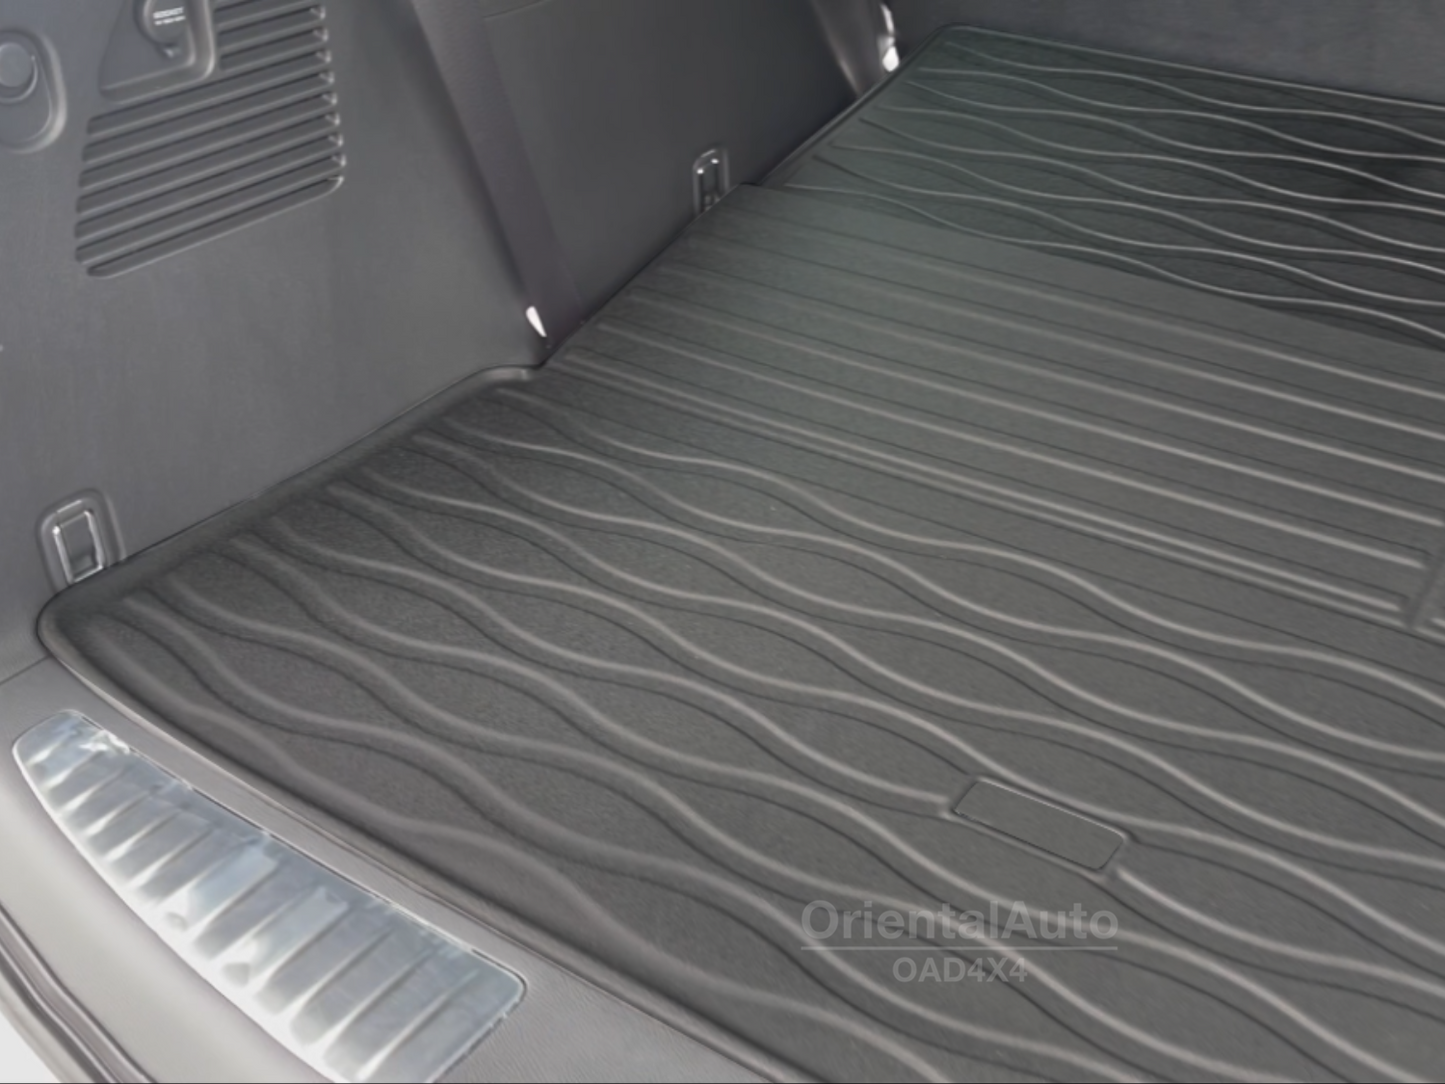 3D TPE 3pcs Detachable Boot Mat for Nissan Patrol Y62 2012-Onwards Cargo Mat Trunk Mat